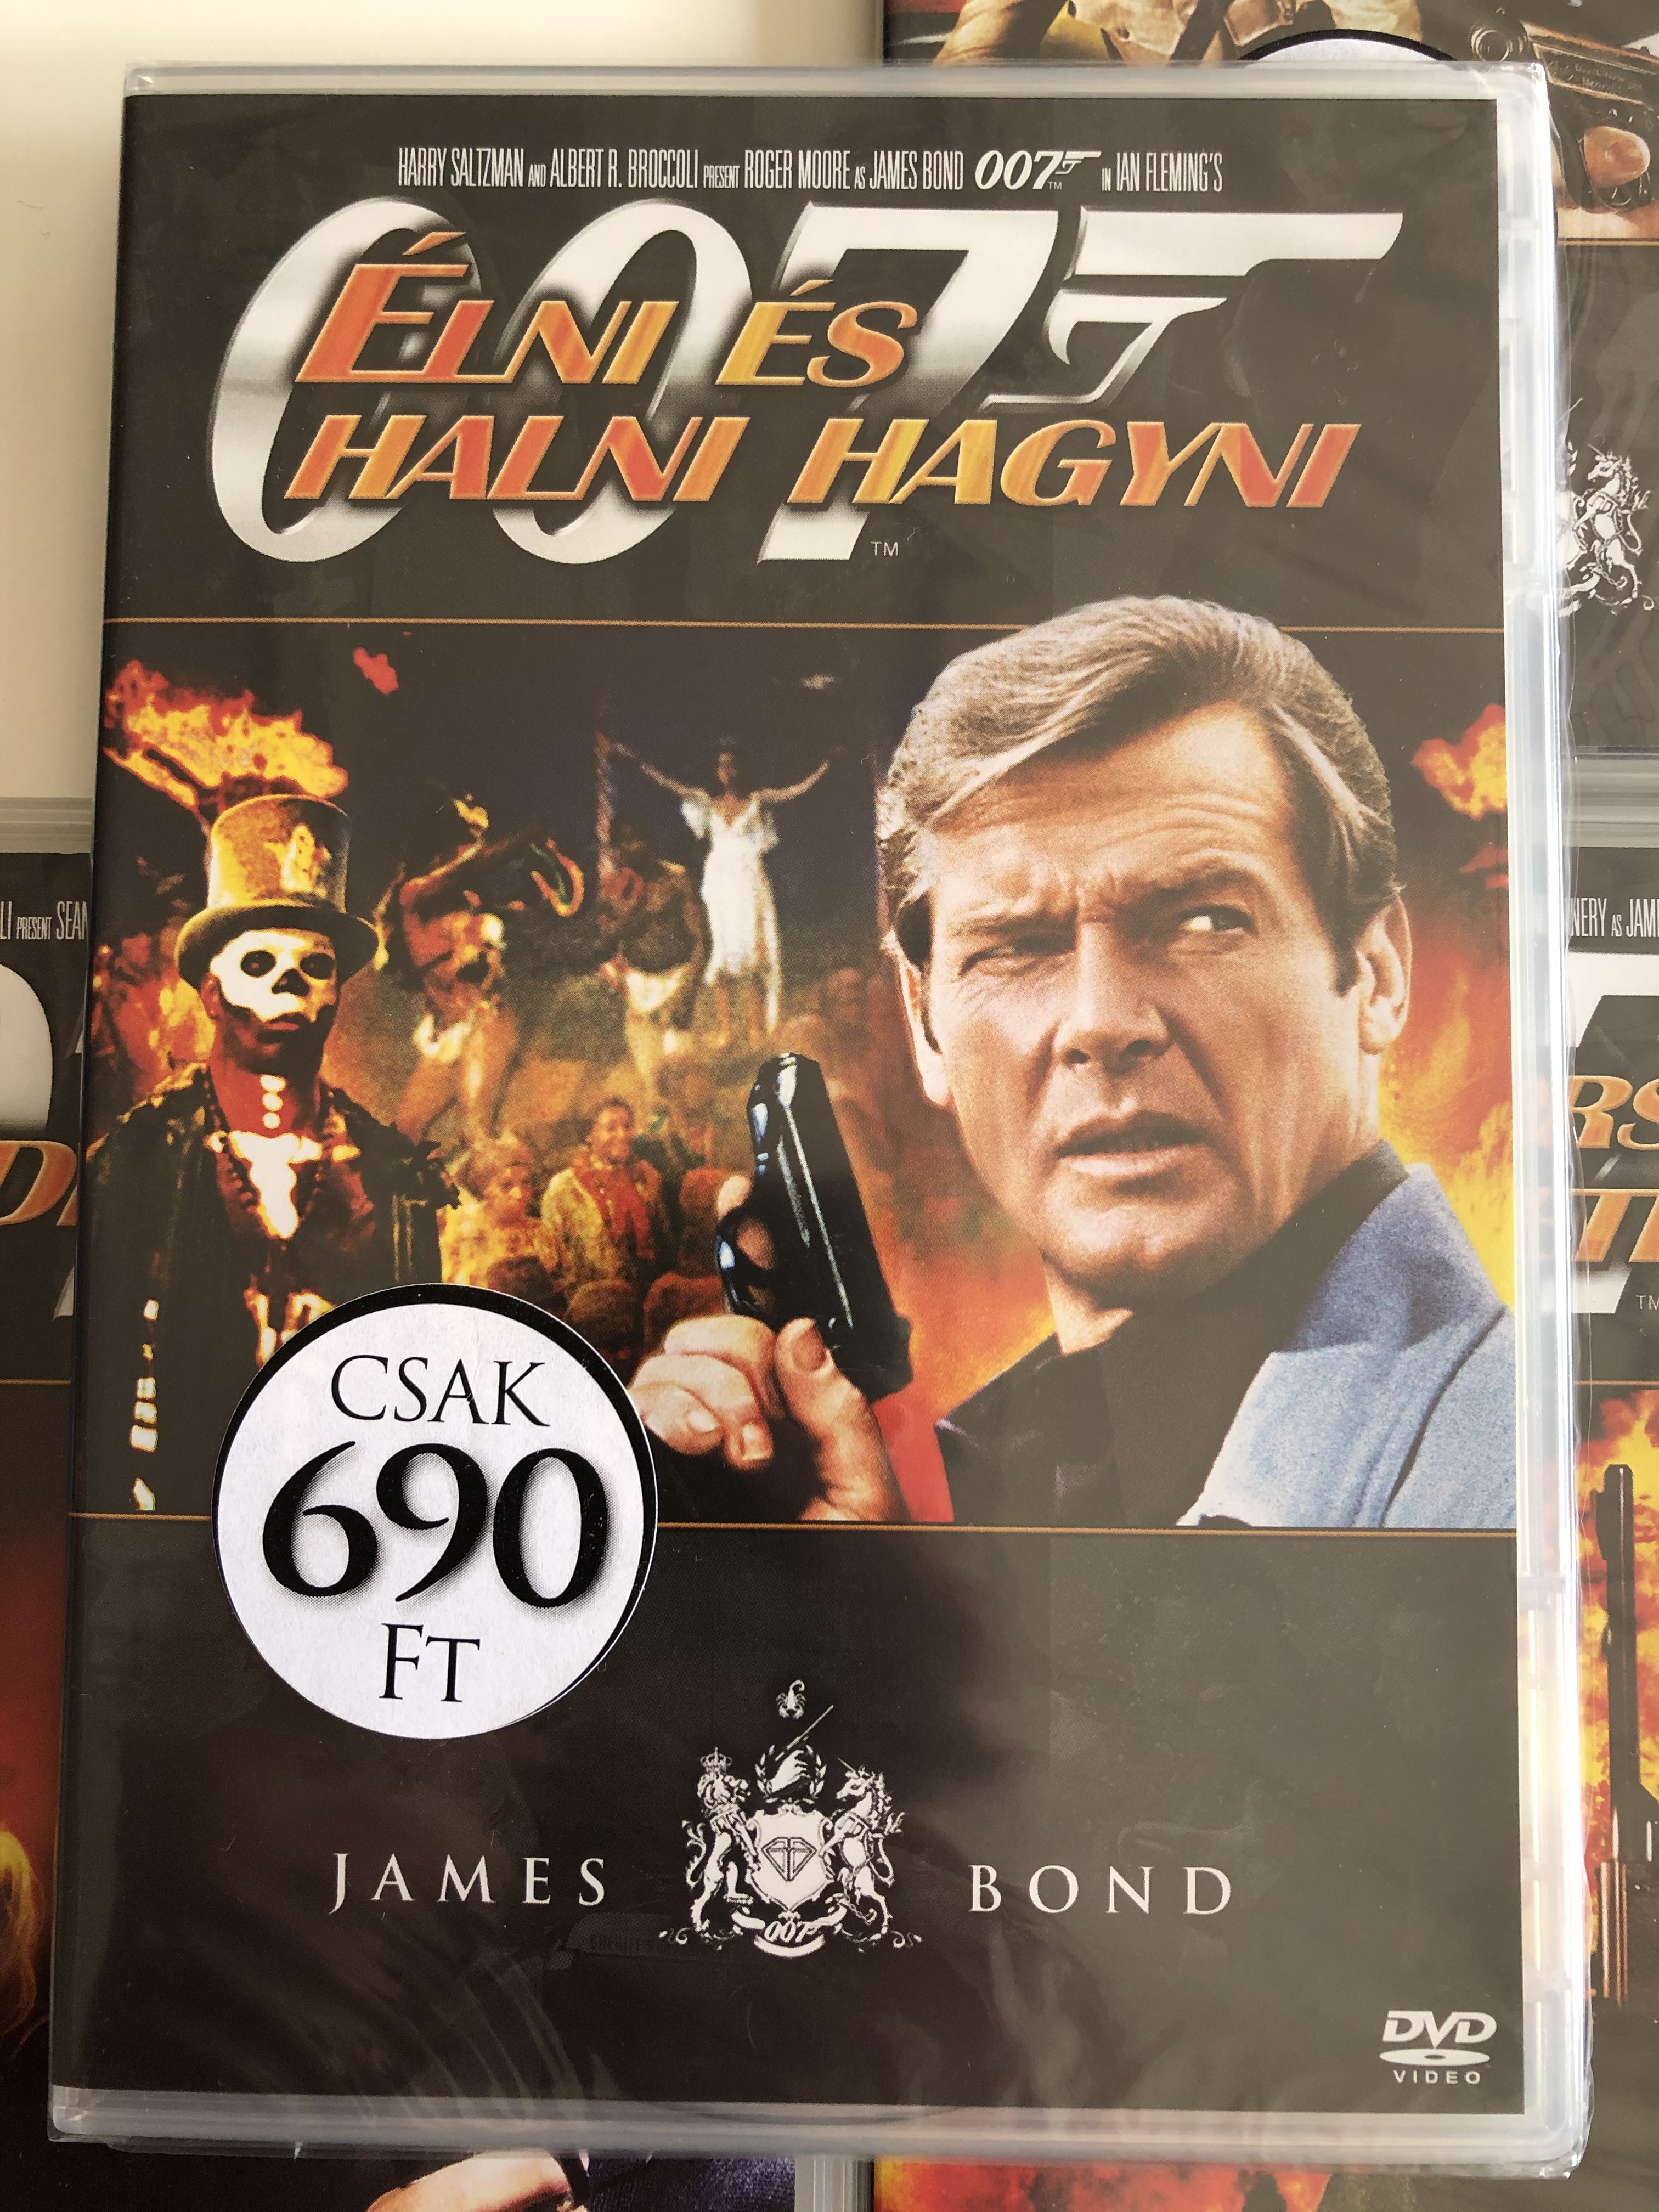 James Bond 007 - Live and Let Die DVD 1973 James Bond - Élni és halni  hagyni / Directed by Lewis Gilbert / Starring: Roger Moore, Yaphet Kotto,  Jane Seymour - bibleinmylanguage